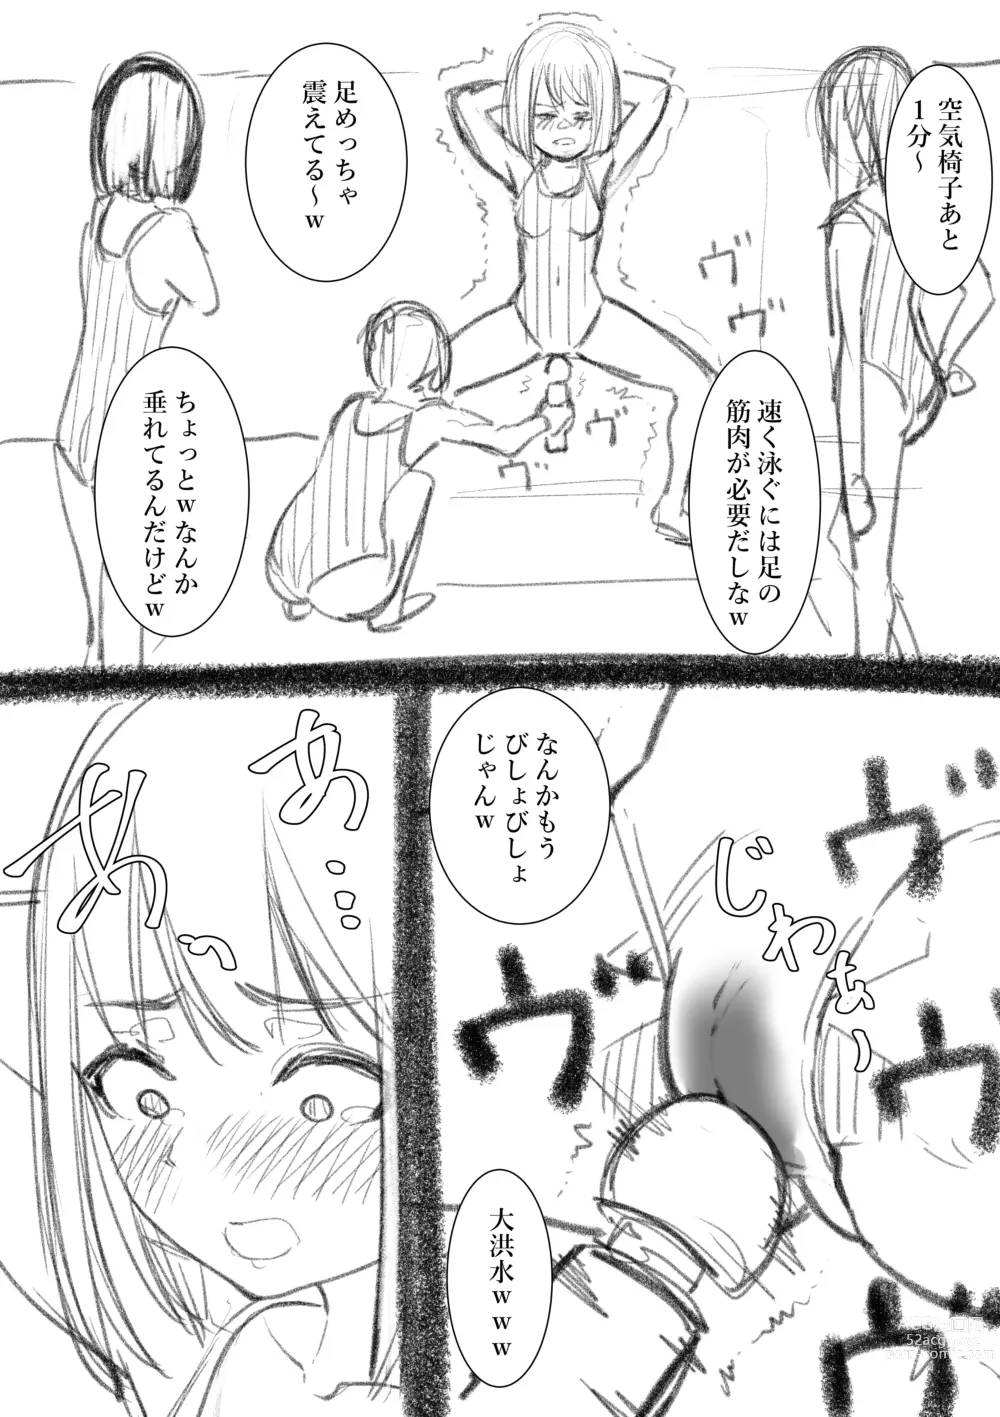 Page 217 of doujinshi Takamurafu manga